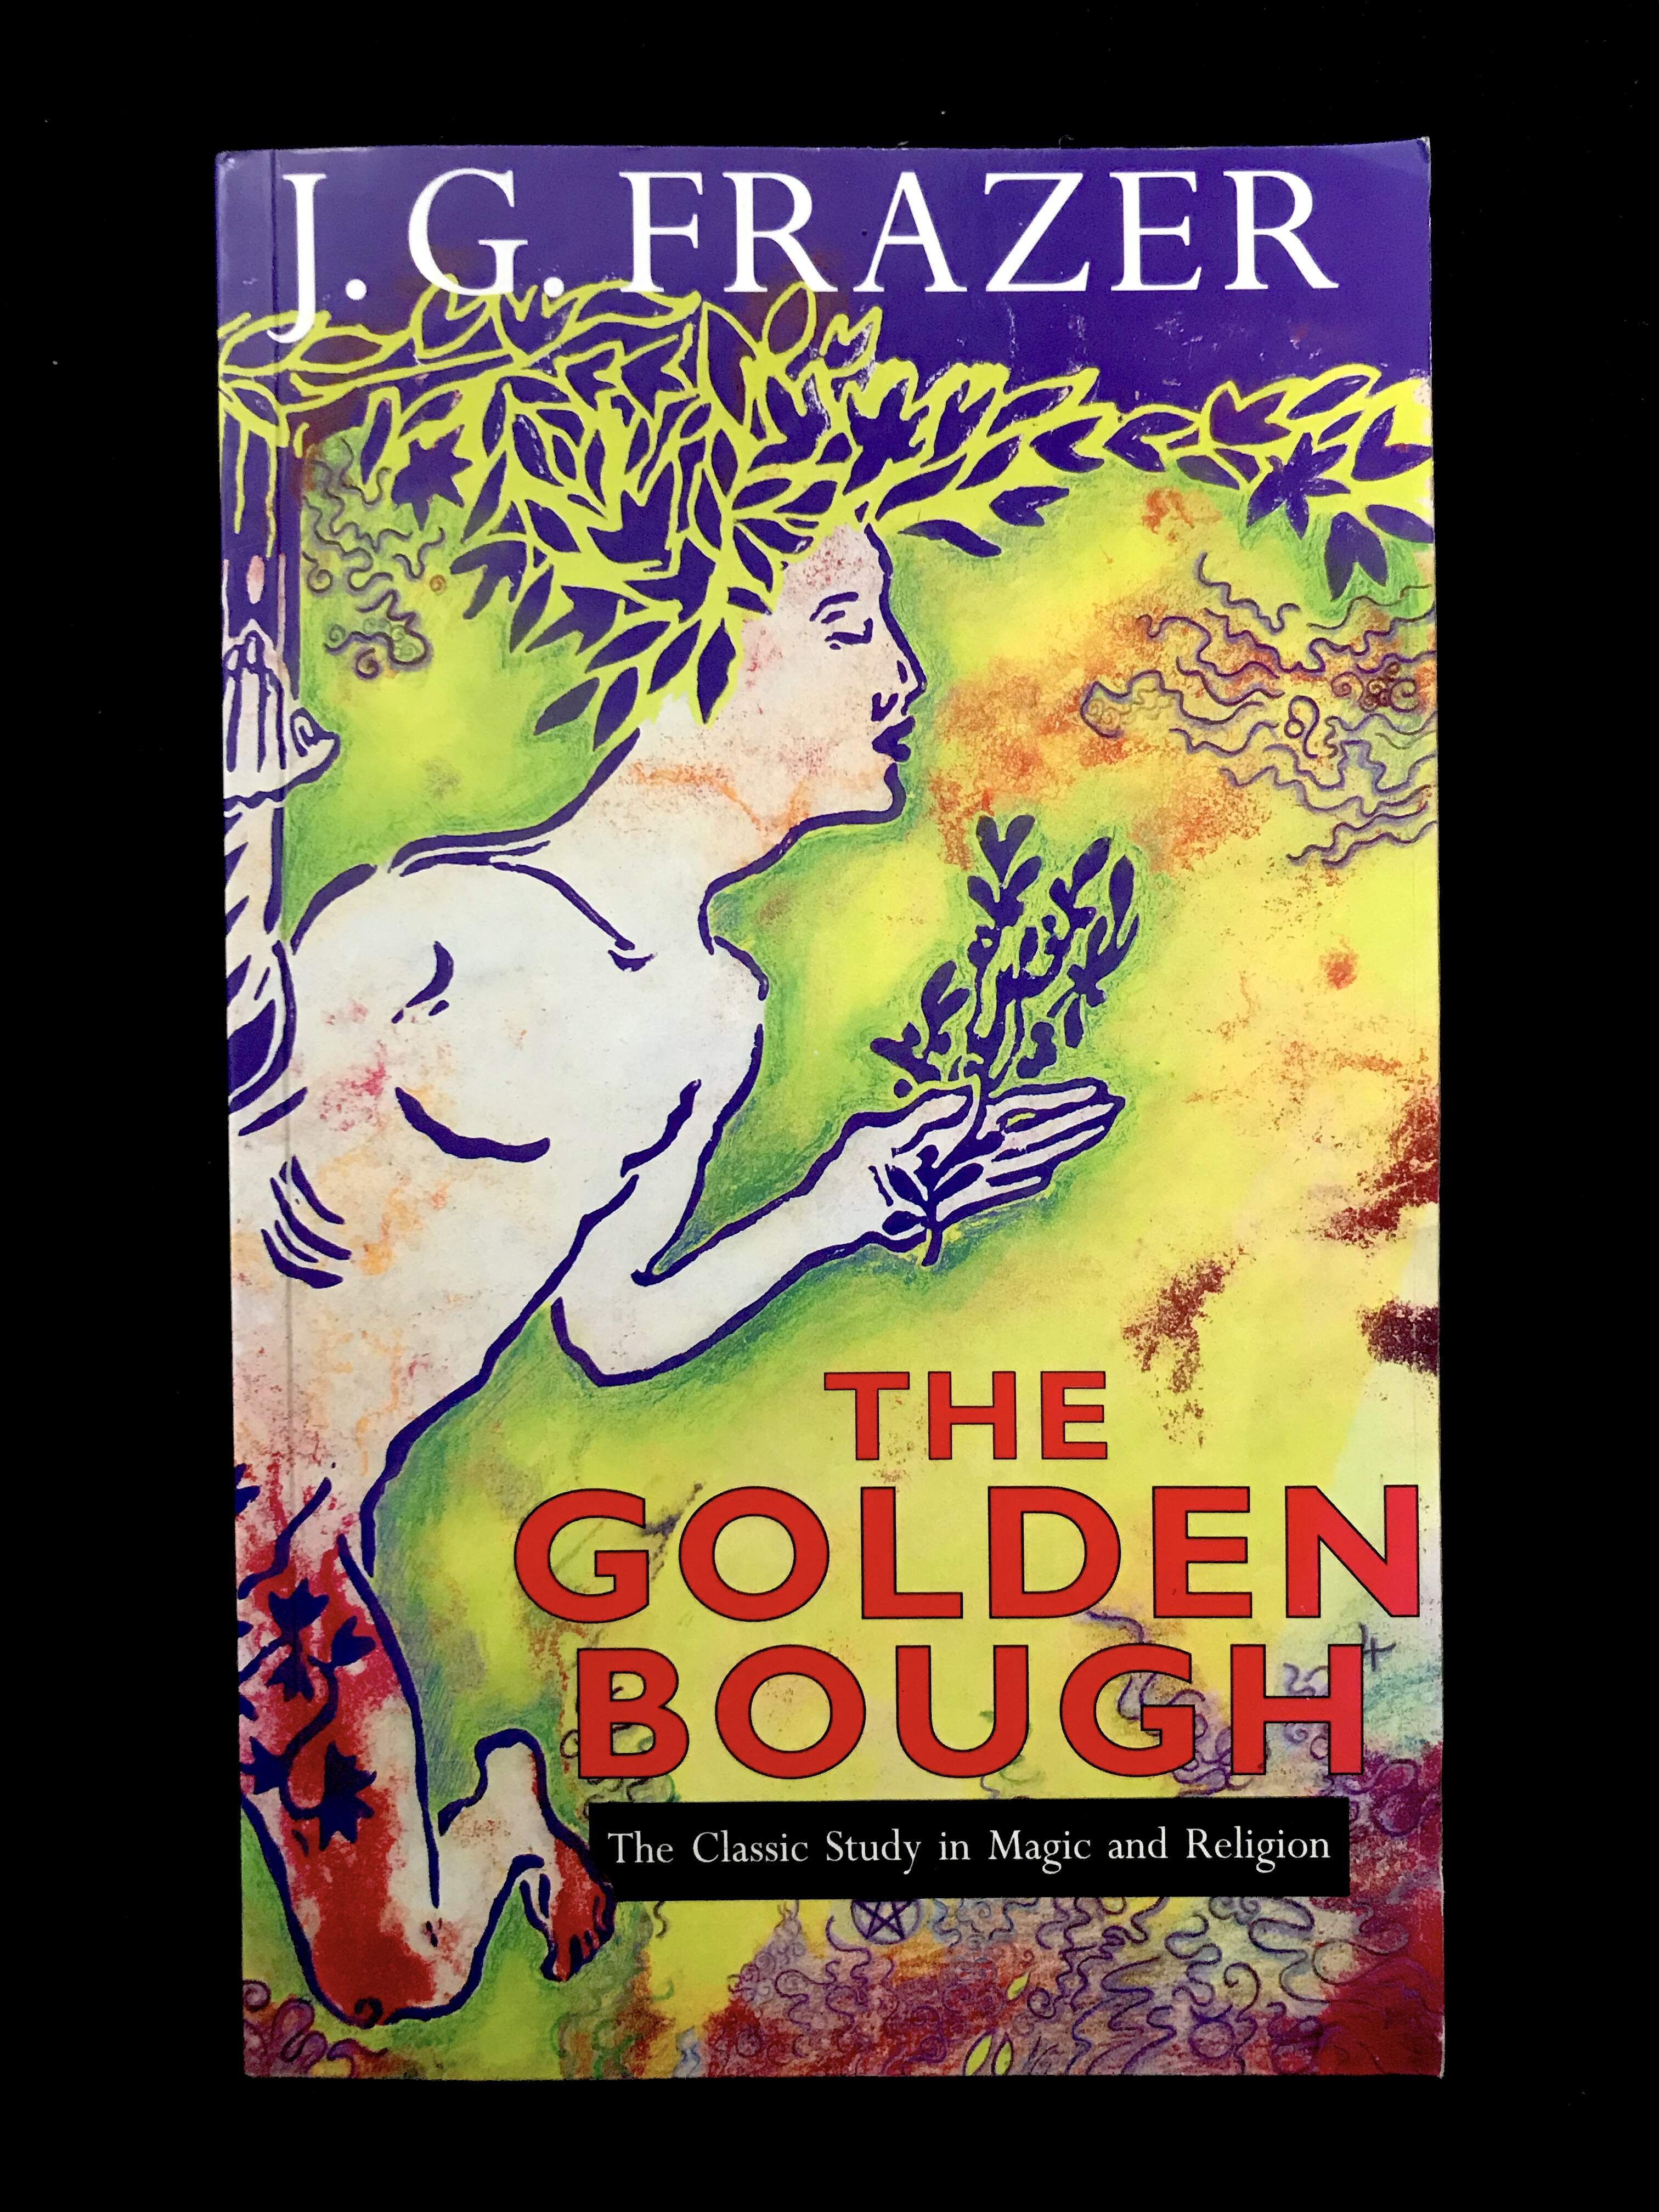 The Golden Bough by J. G. Frazer